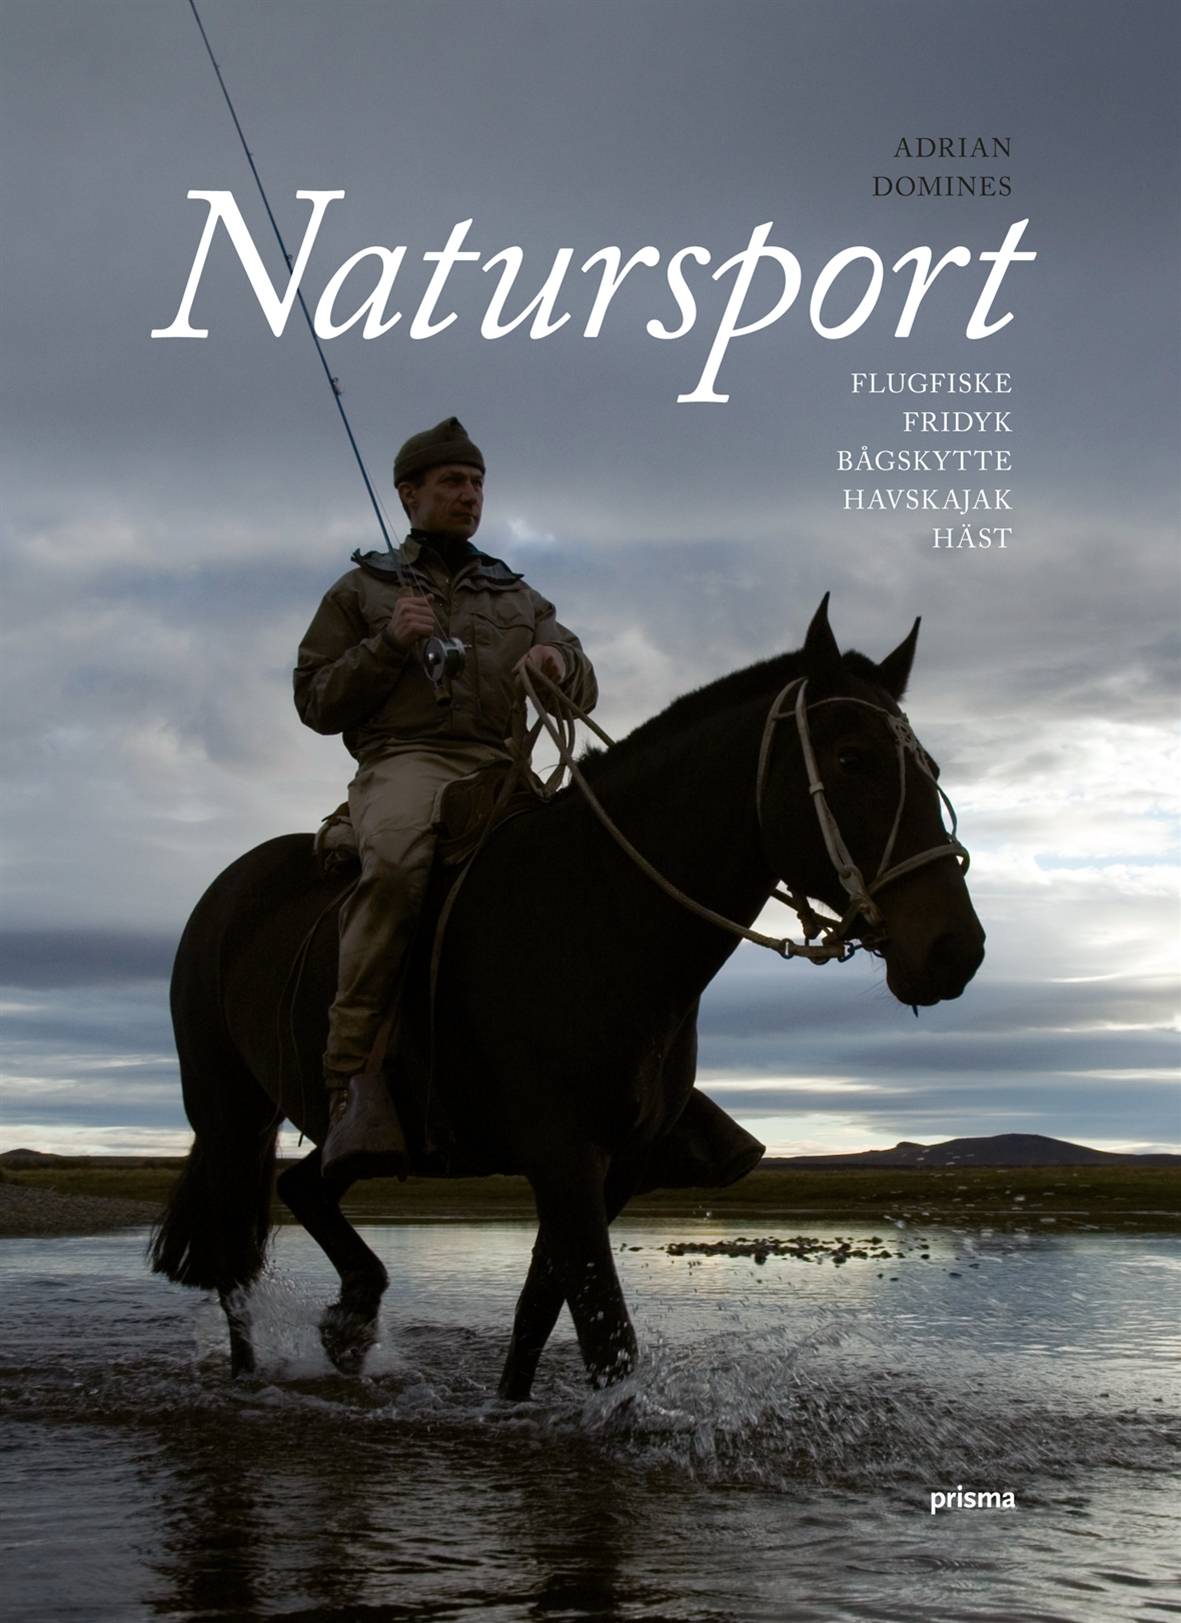 Natursport : flugfiske, fridyk, havskajak, bågskytte, häst